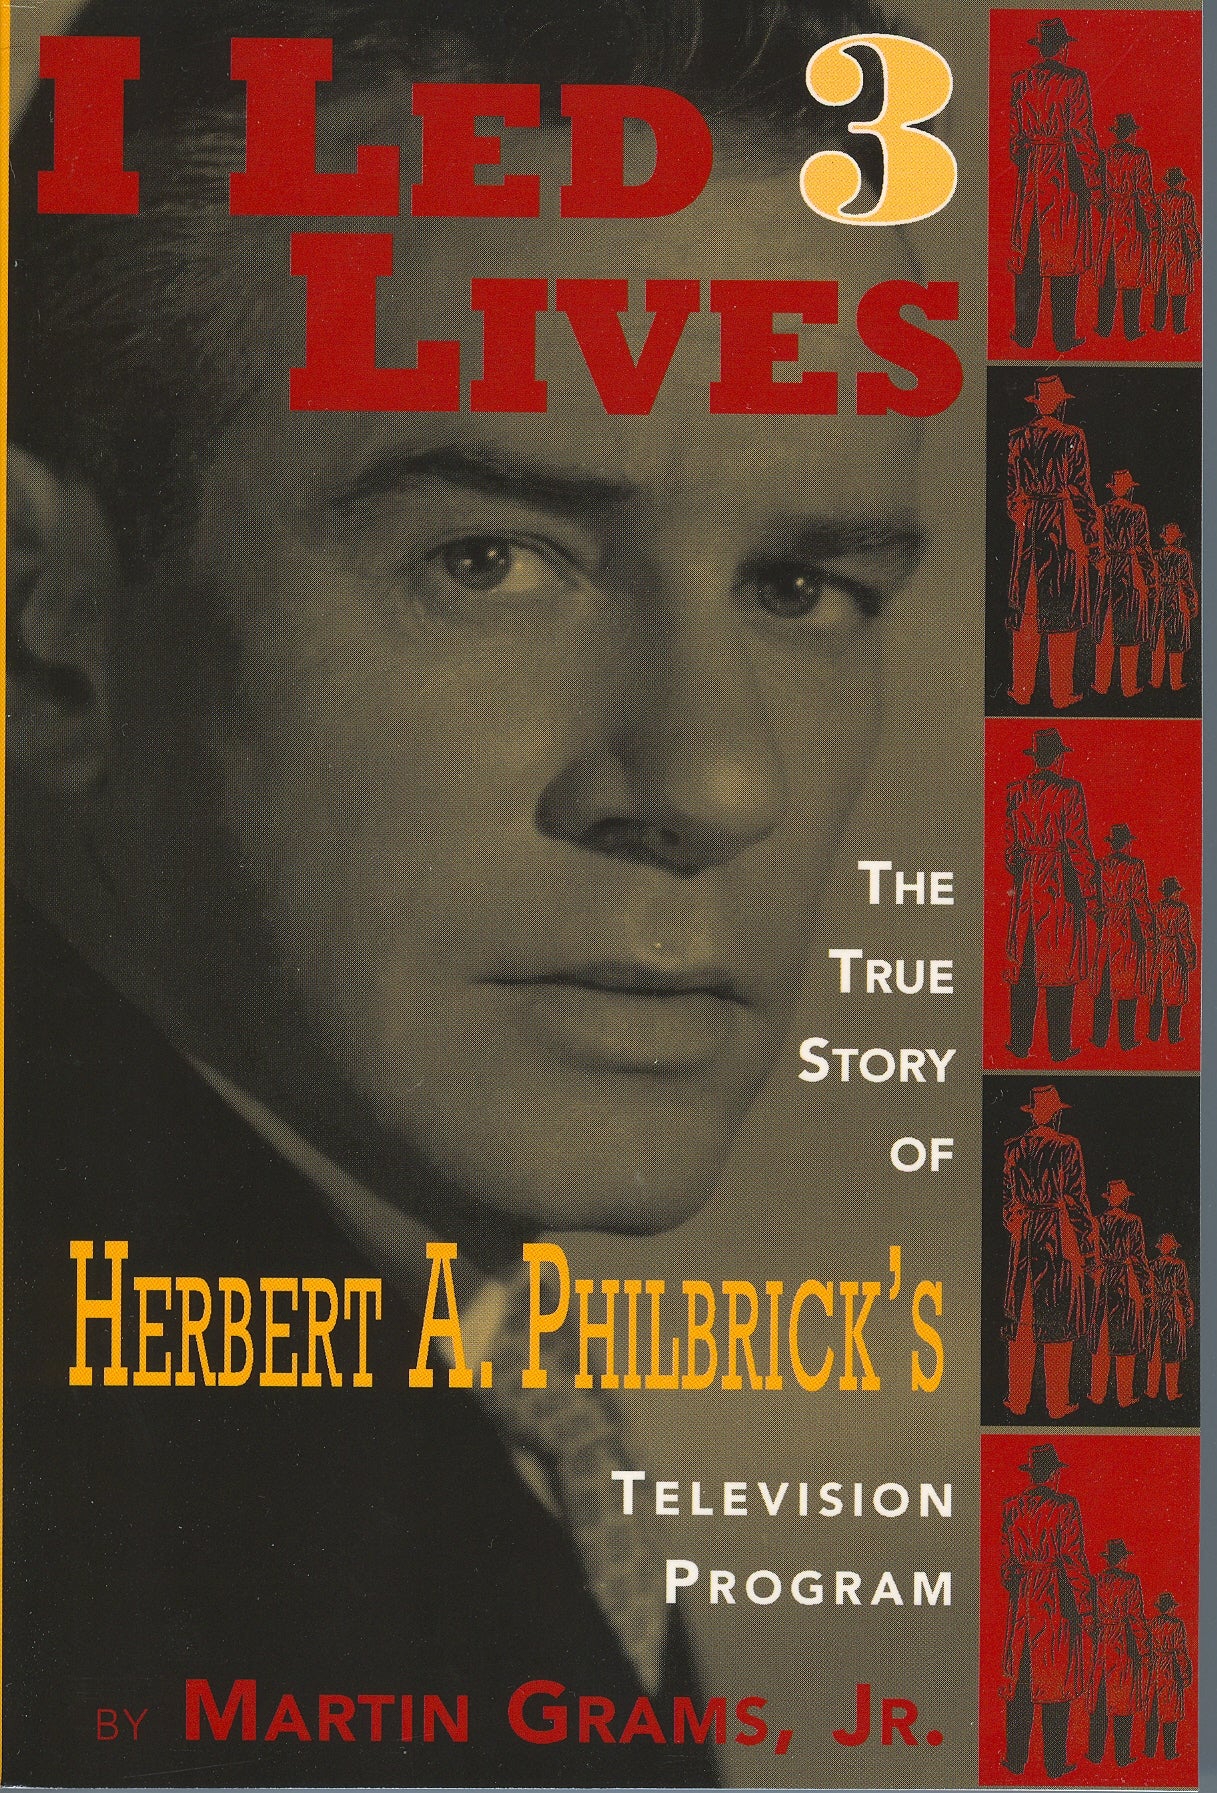 I LED THREE LIVES: The True Story of Herbert A. Philbrick’s Television Program